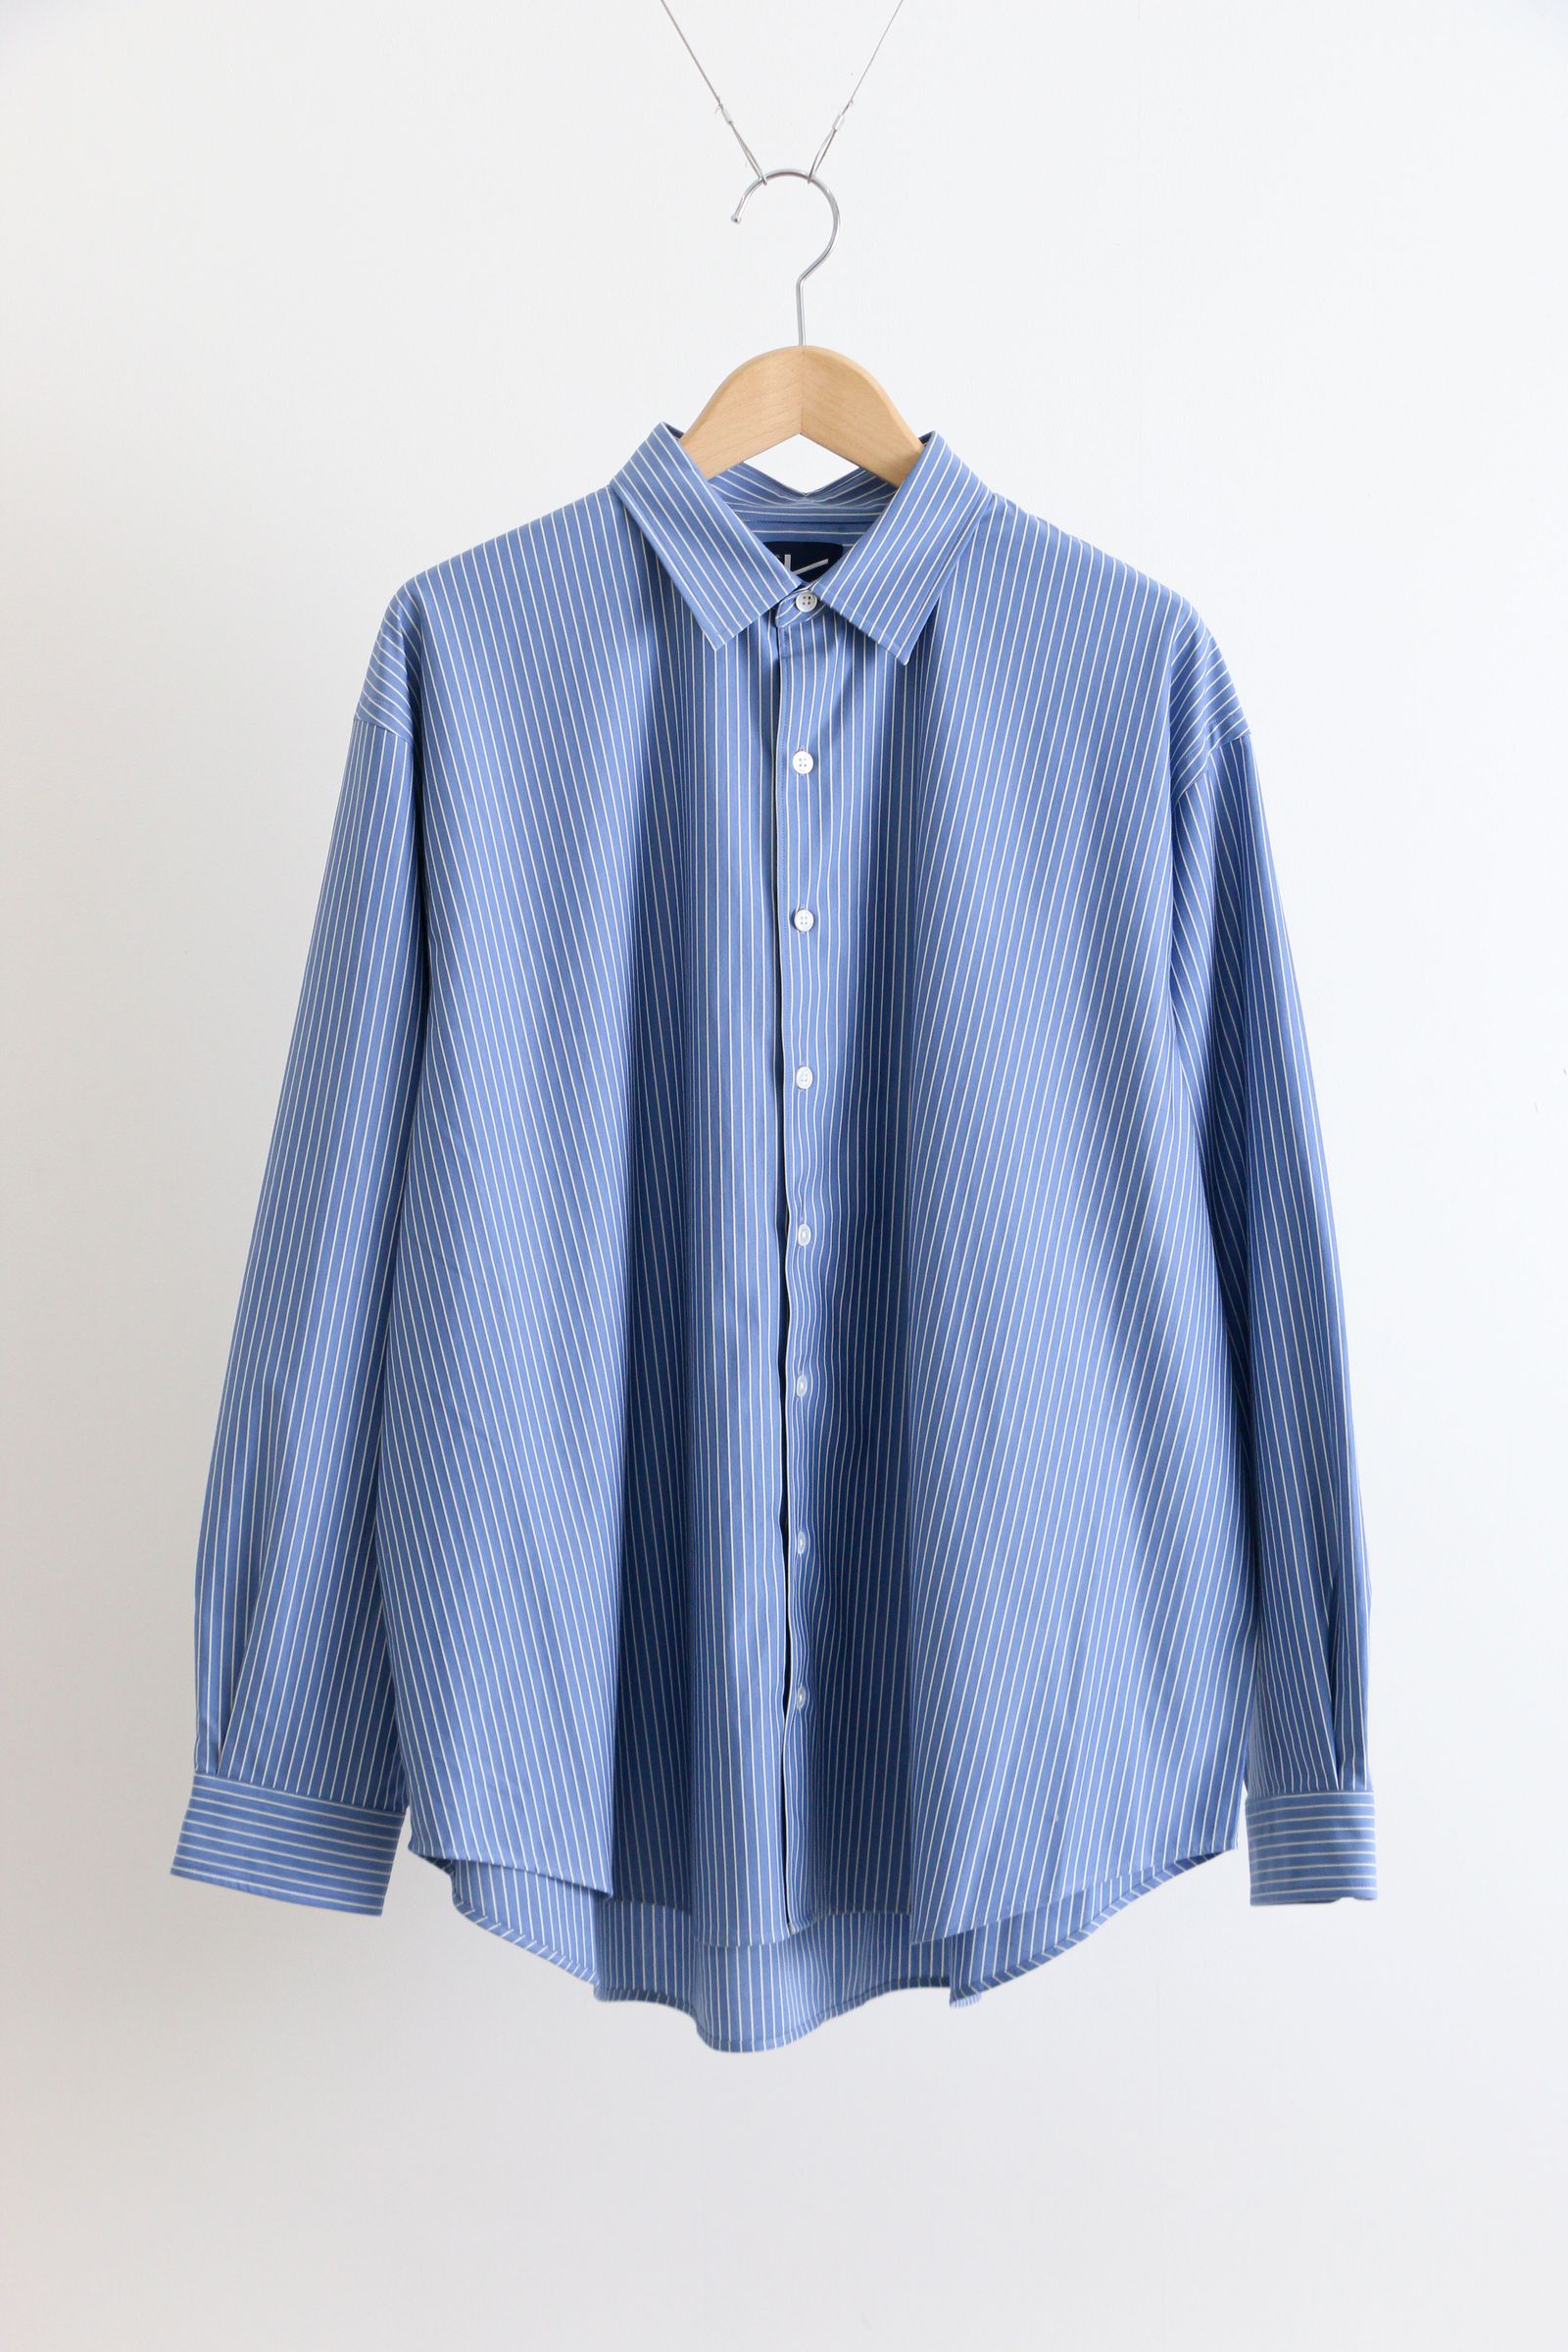 KANEMASA PHIL. - Pencil Stripe Dress Jersey Shirt / BL SP